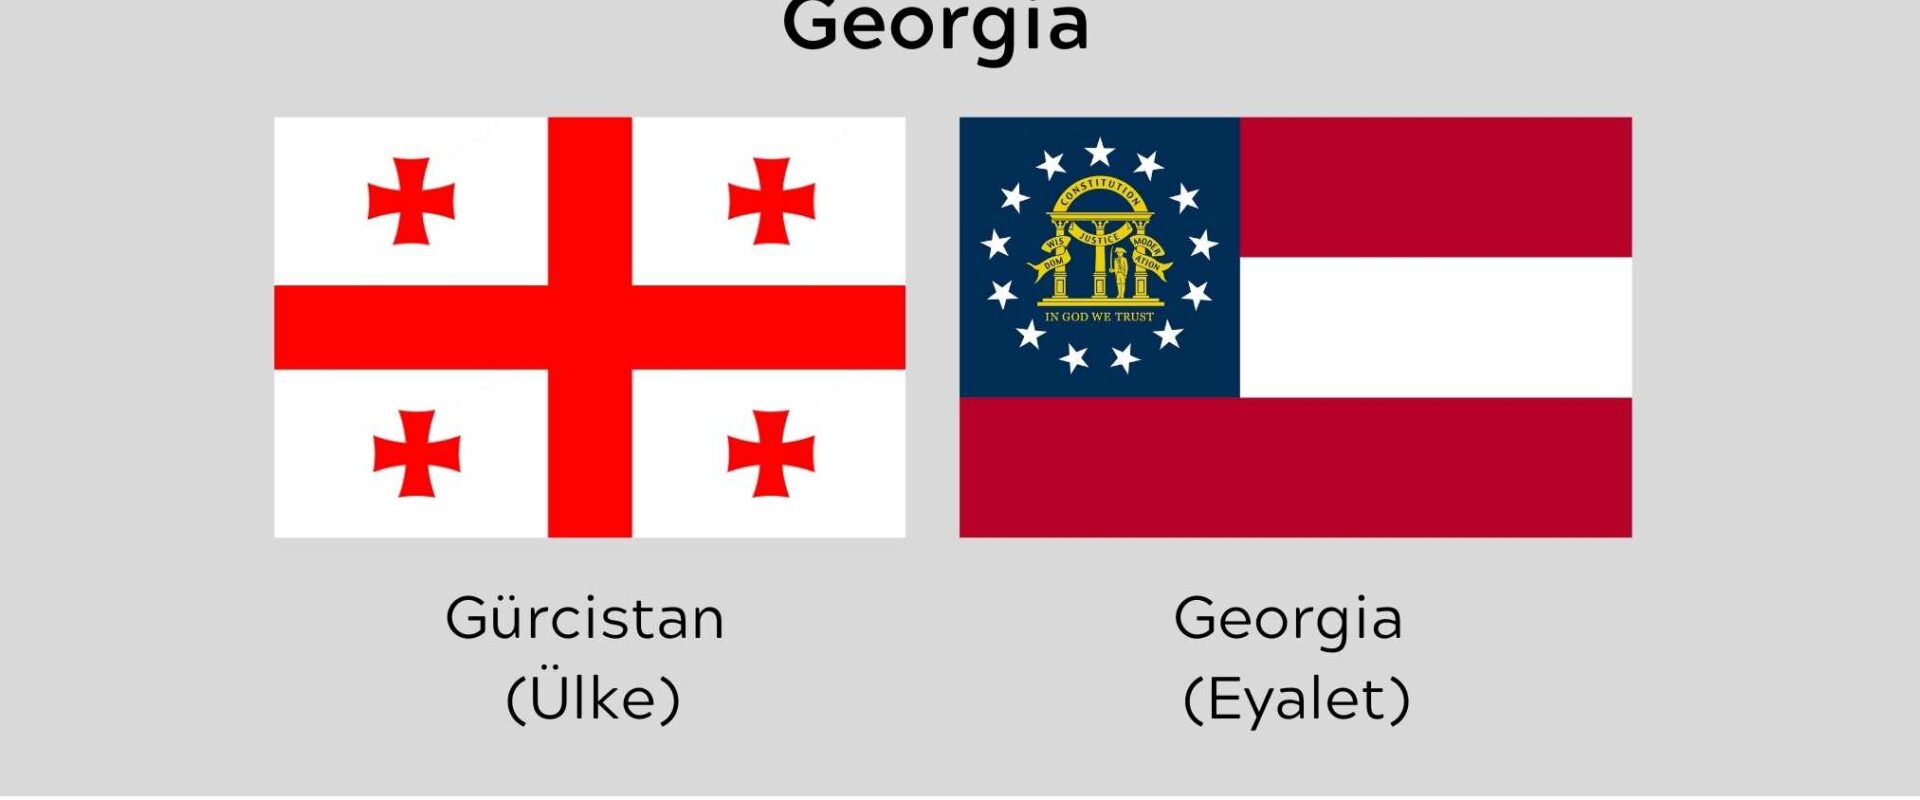 gürcistan georgia